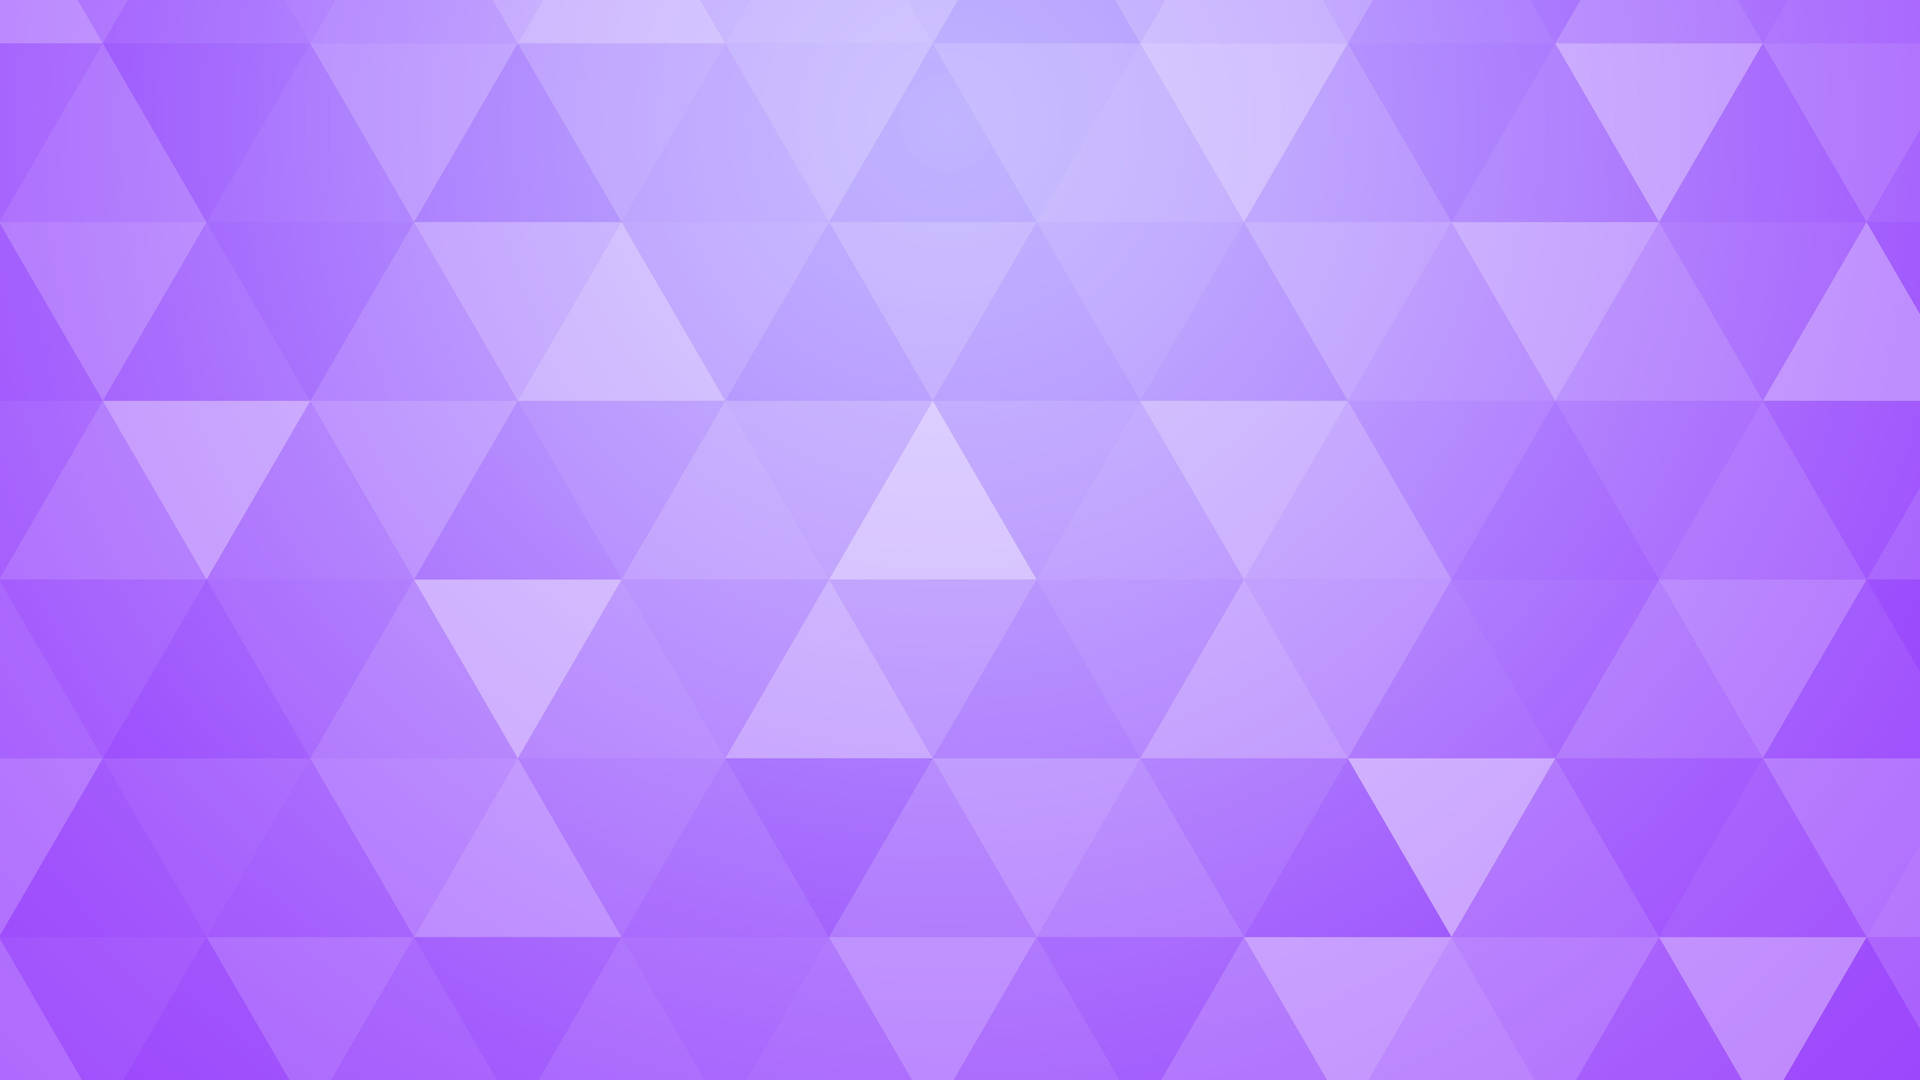 Violet Aesthetic Triangular Geometric Shapes